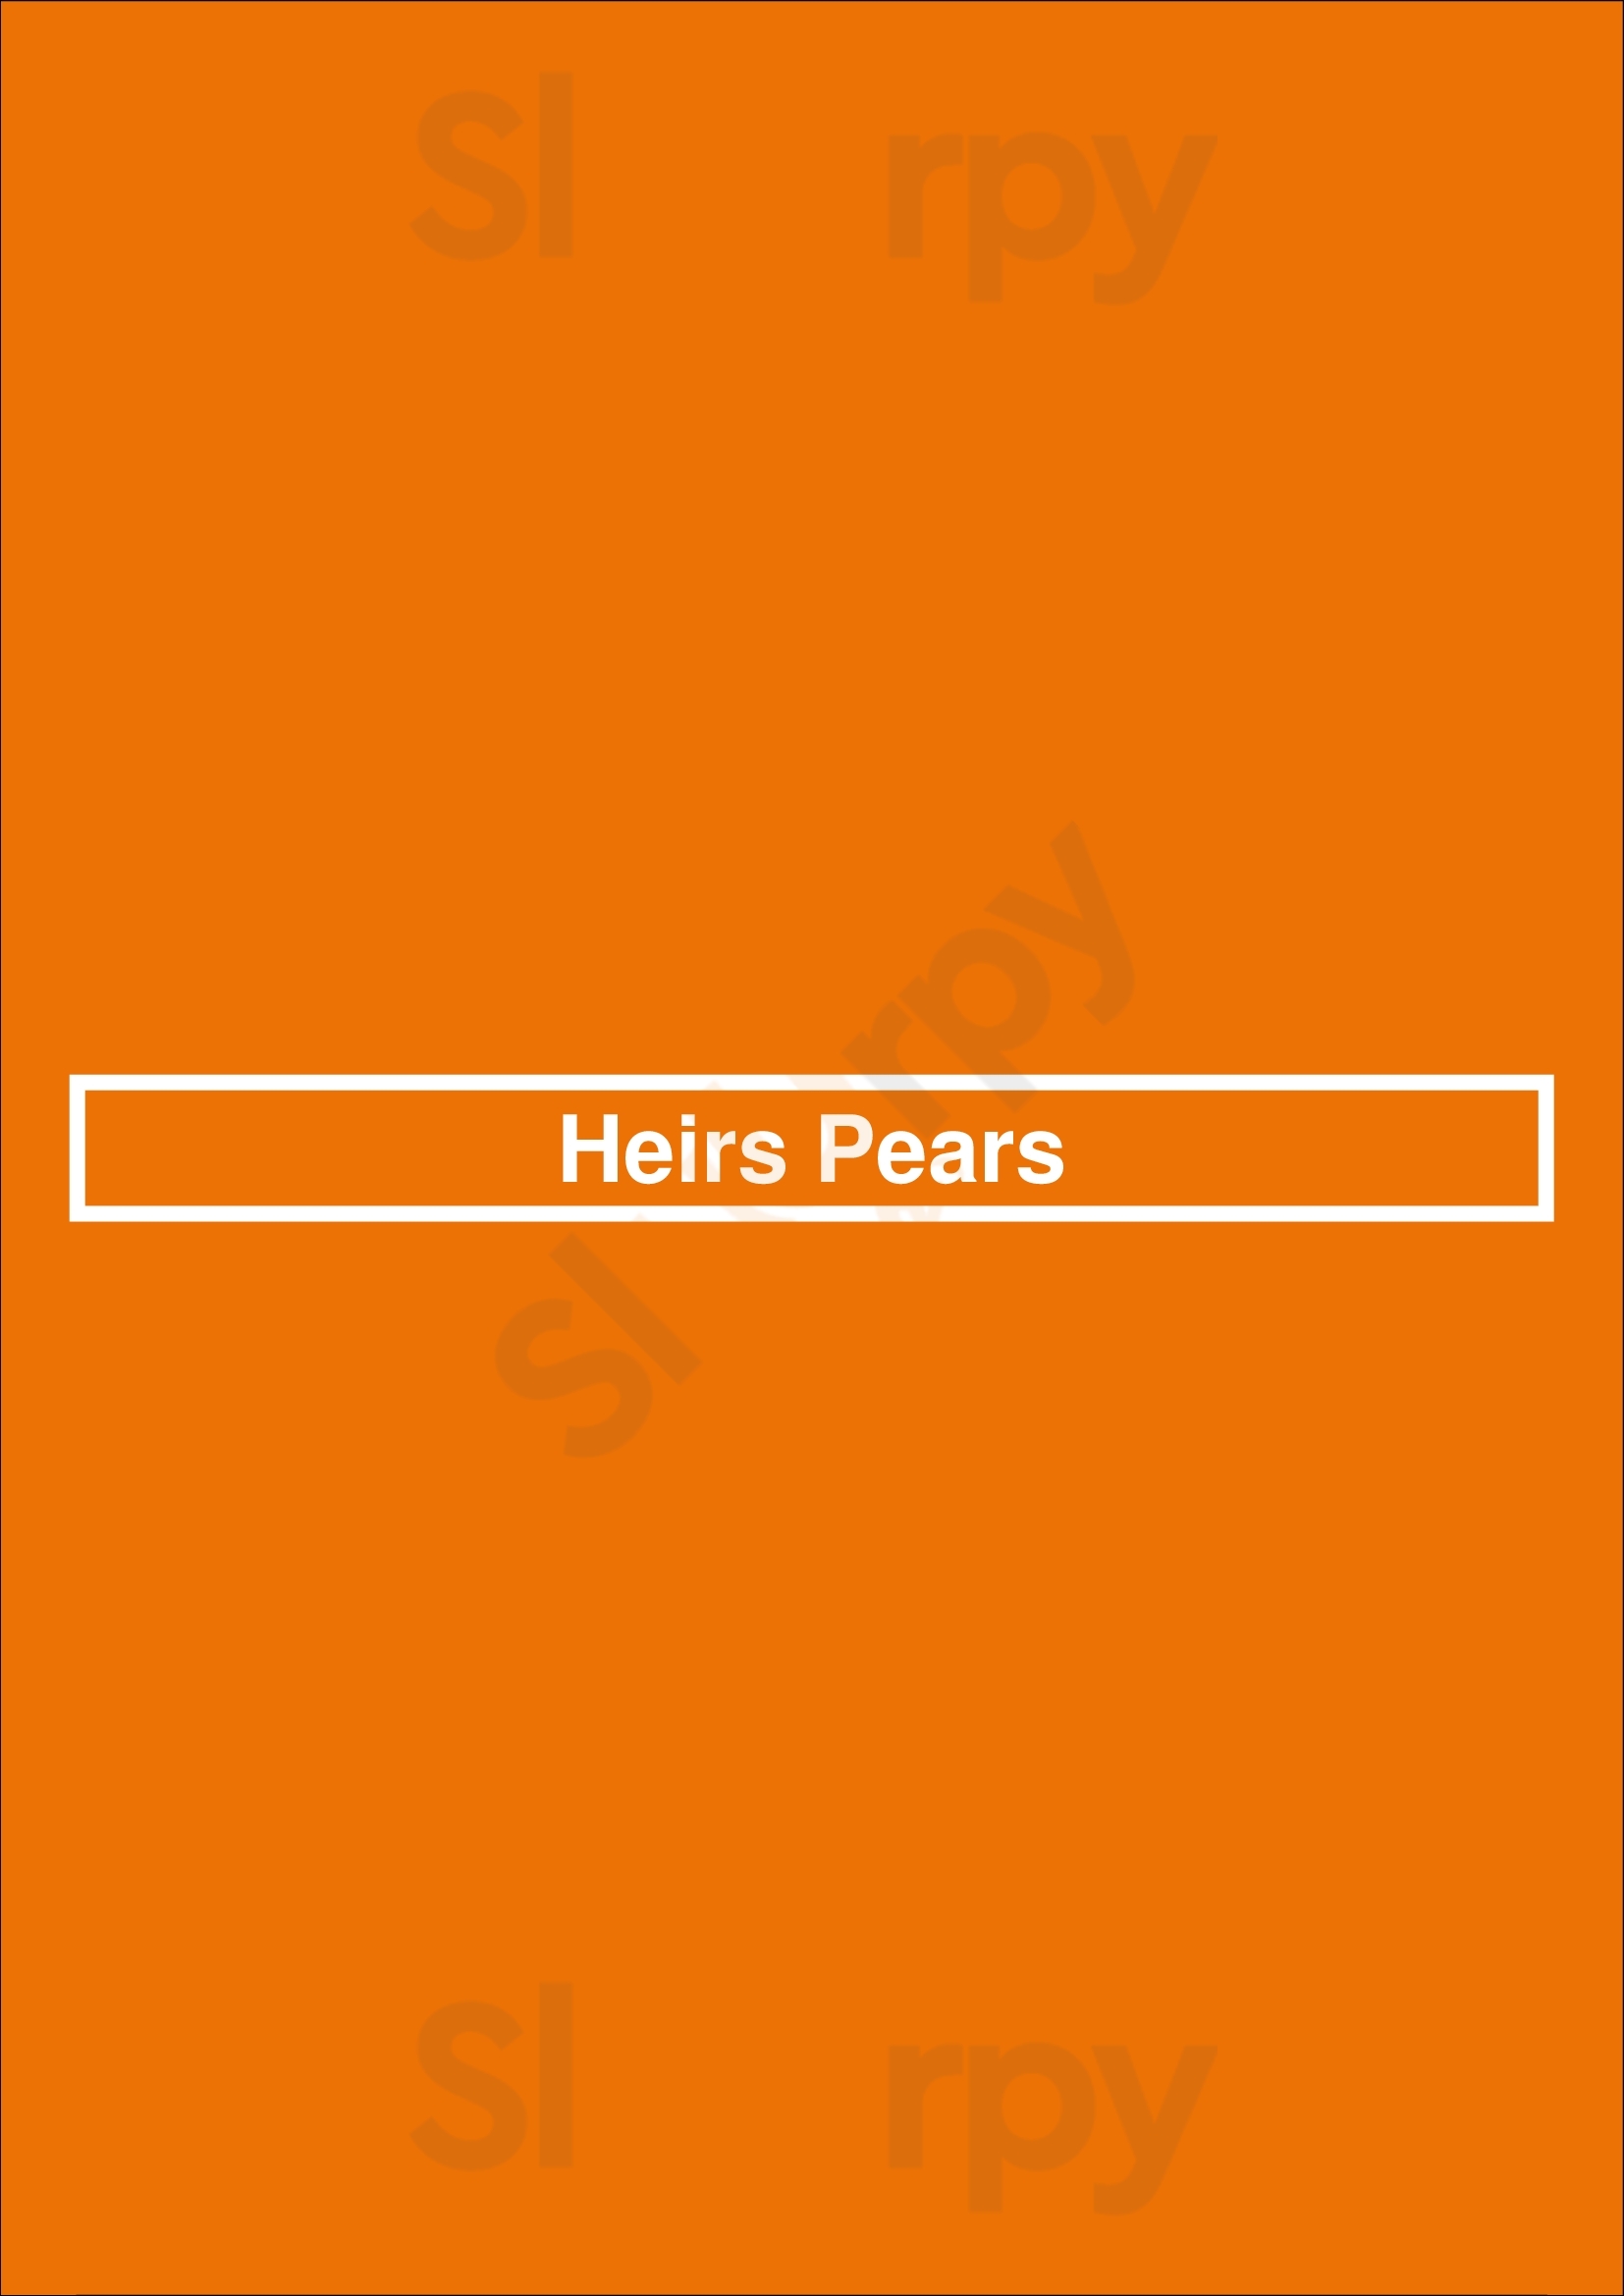 Heirs Pears Vancouver Menu - 1